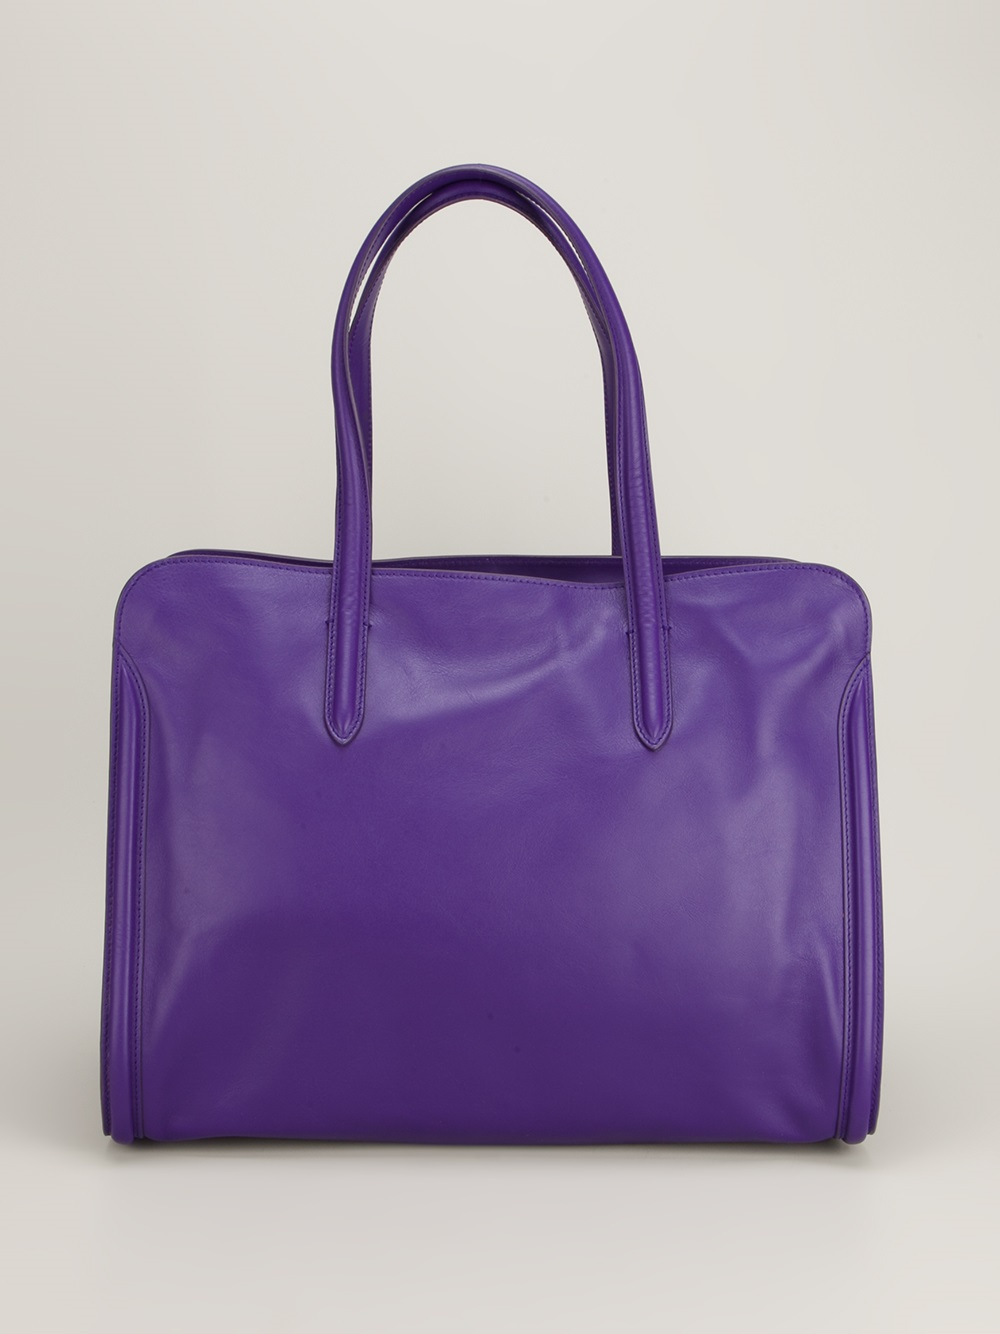 Lyst - Alexander Mcqueen Tote Bag in Purple